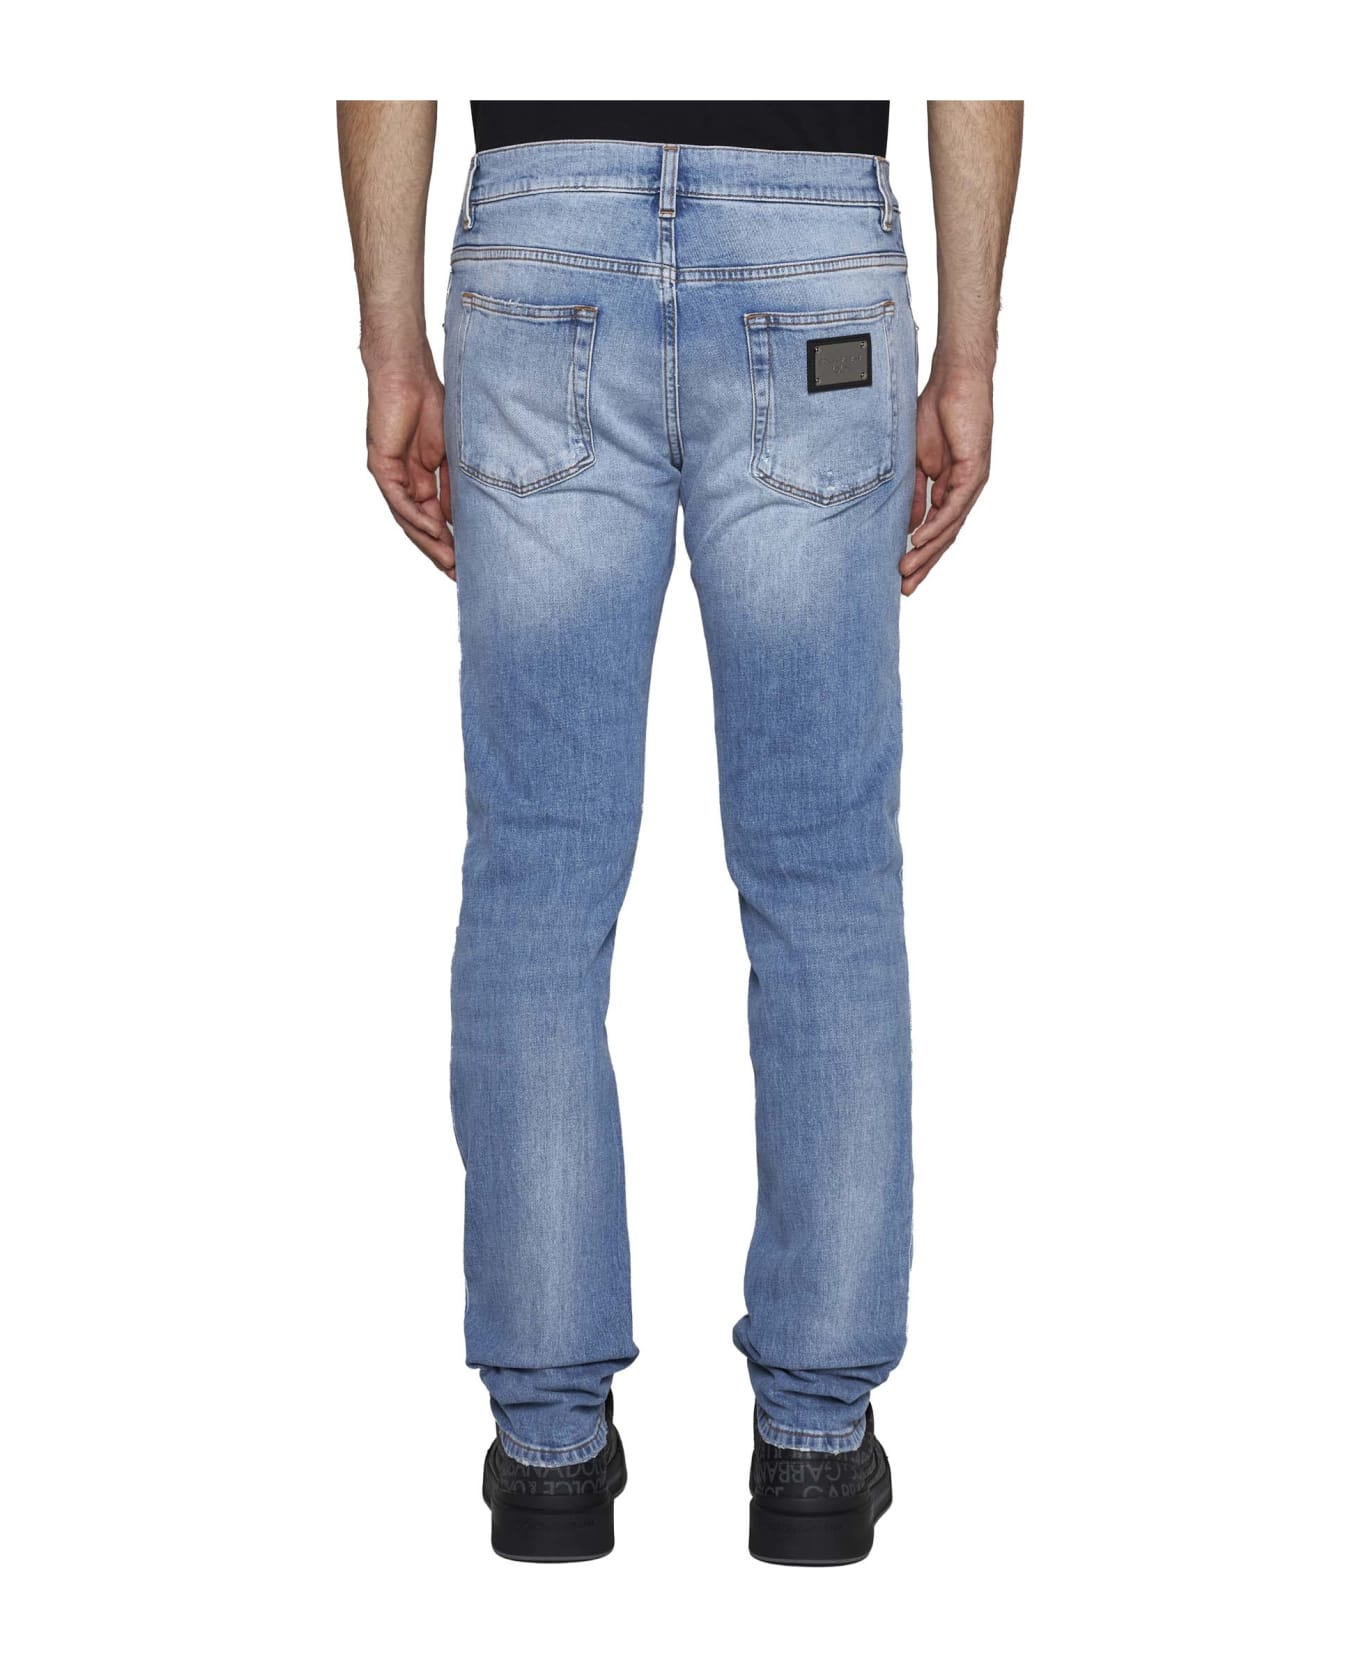 Dolce & Gabbana Skinny Denim Jeans - Variante abbinata デニム